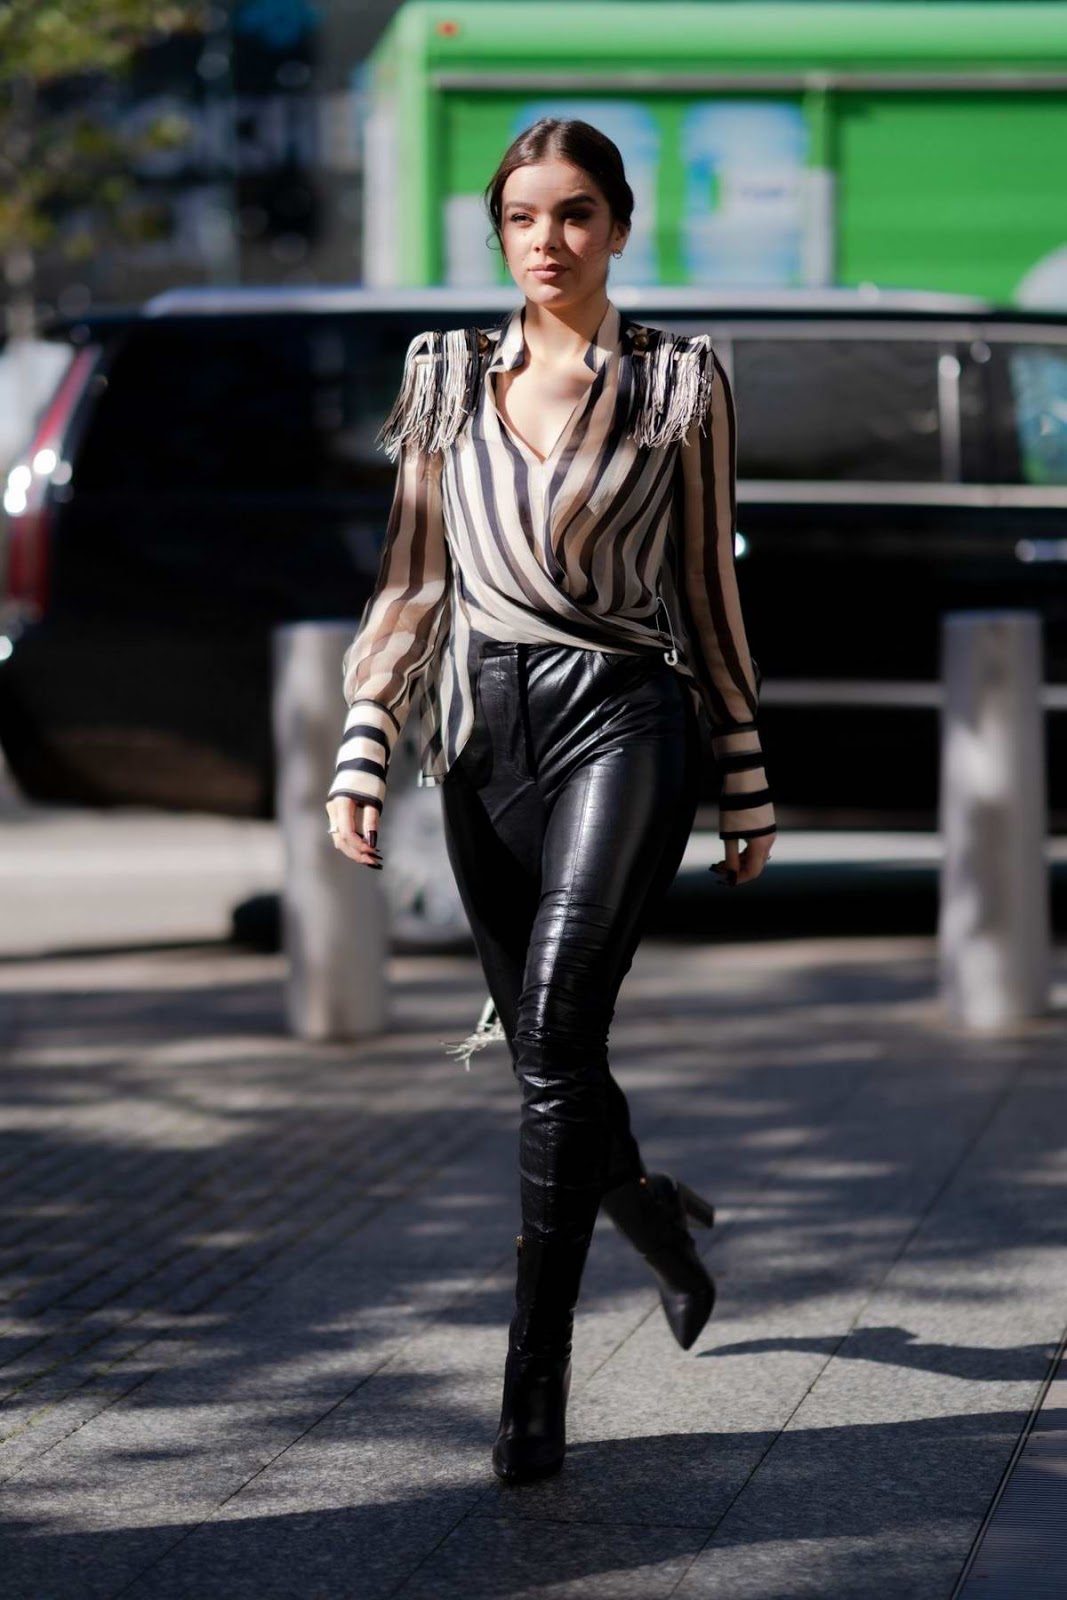 Hailee Steinfeld female celebrity high street style fashion in New York City